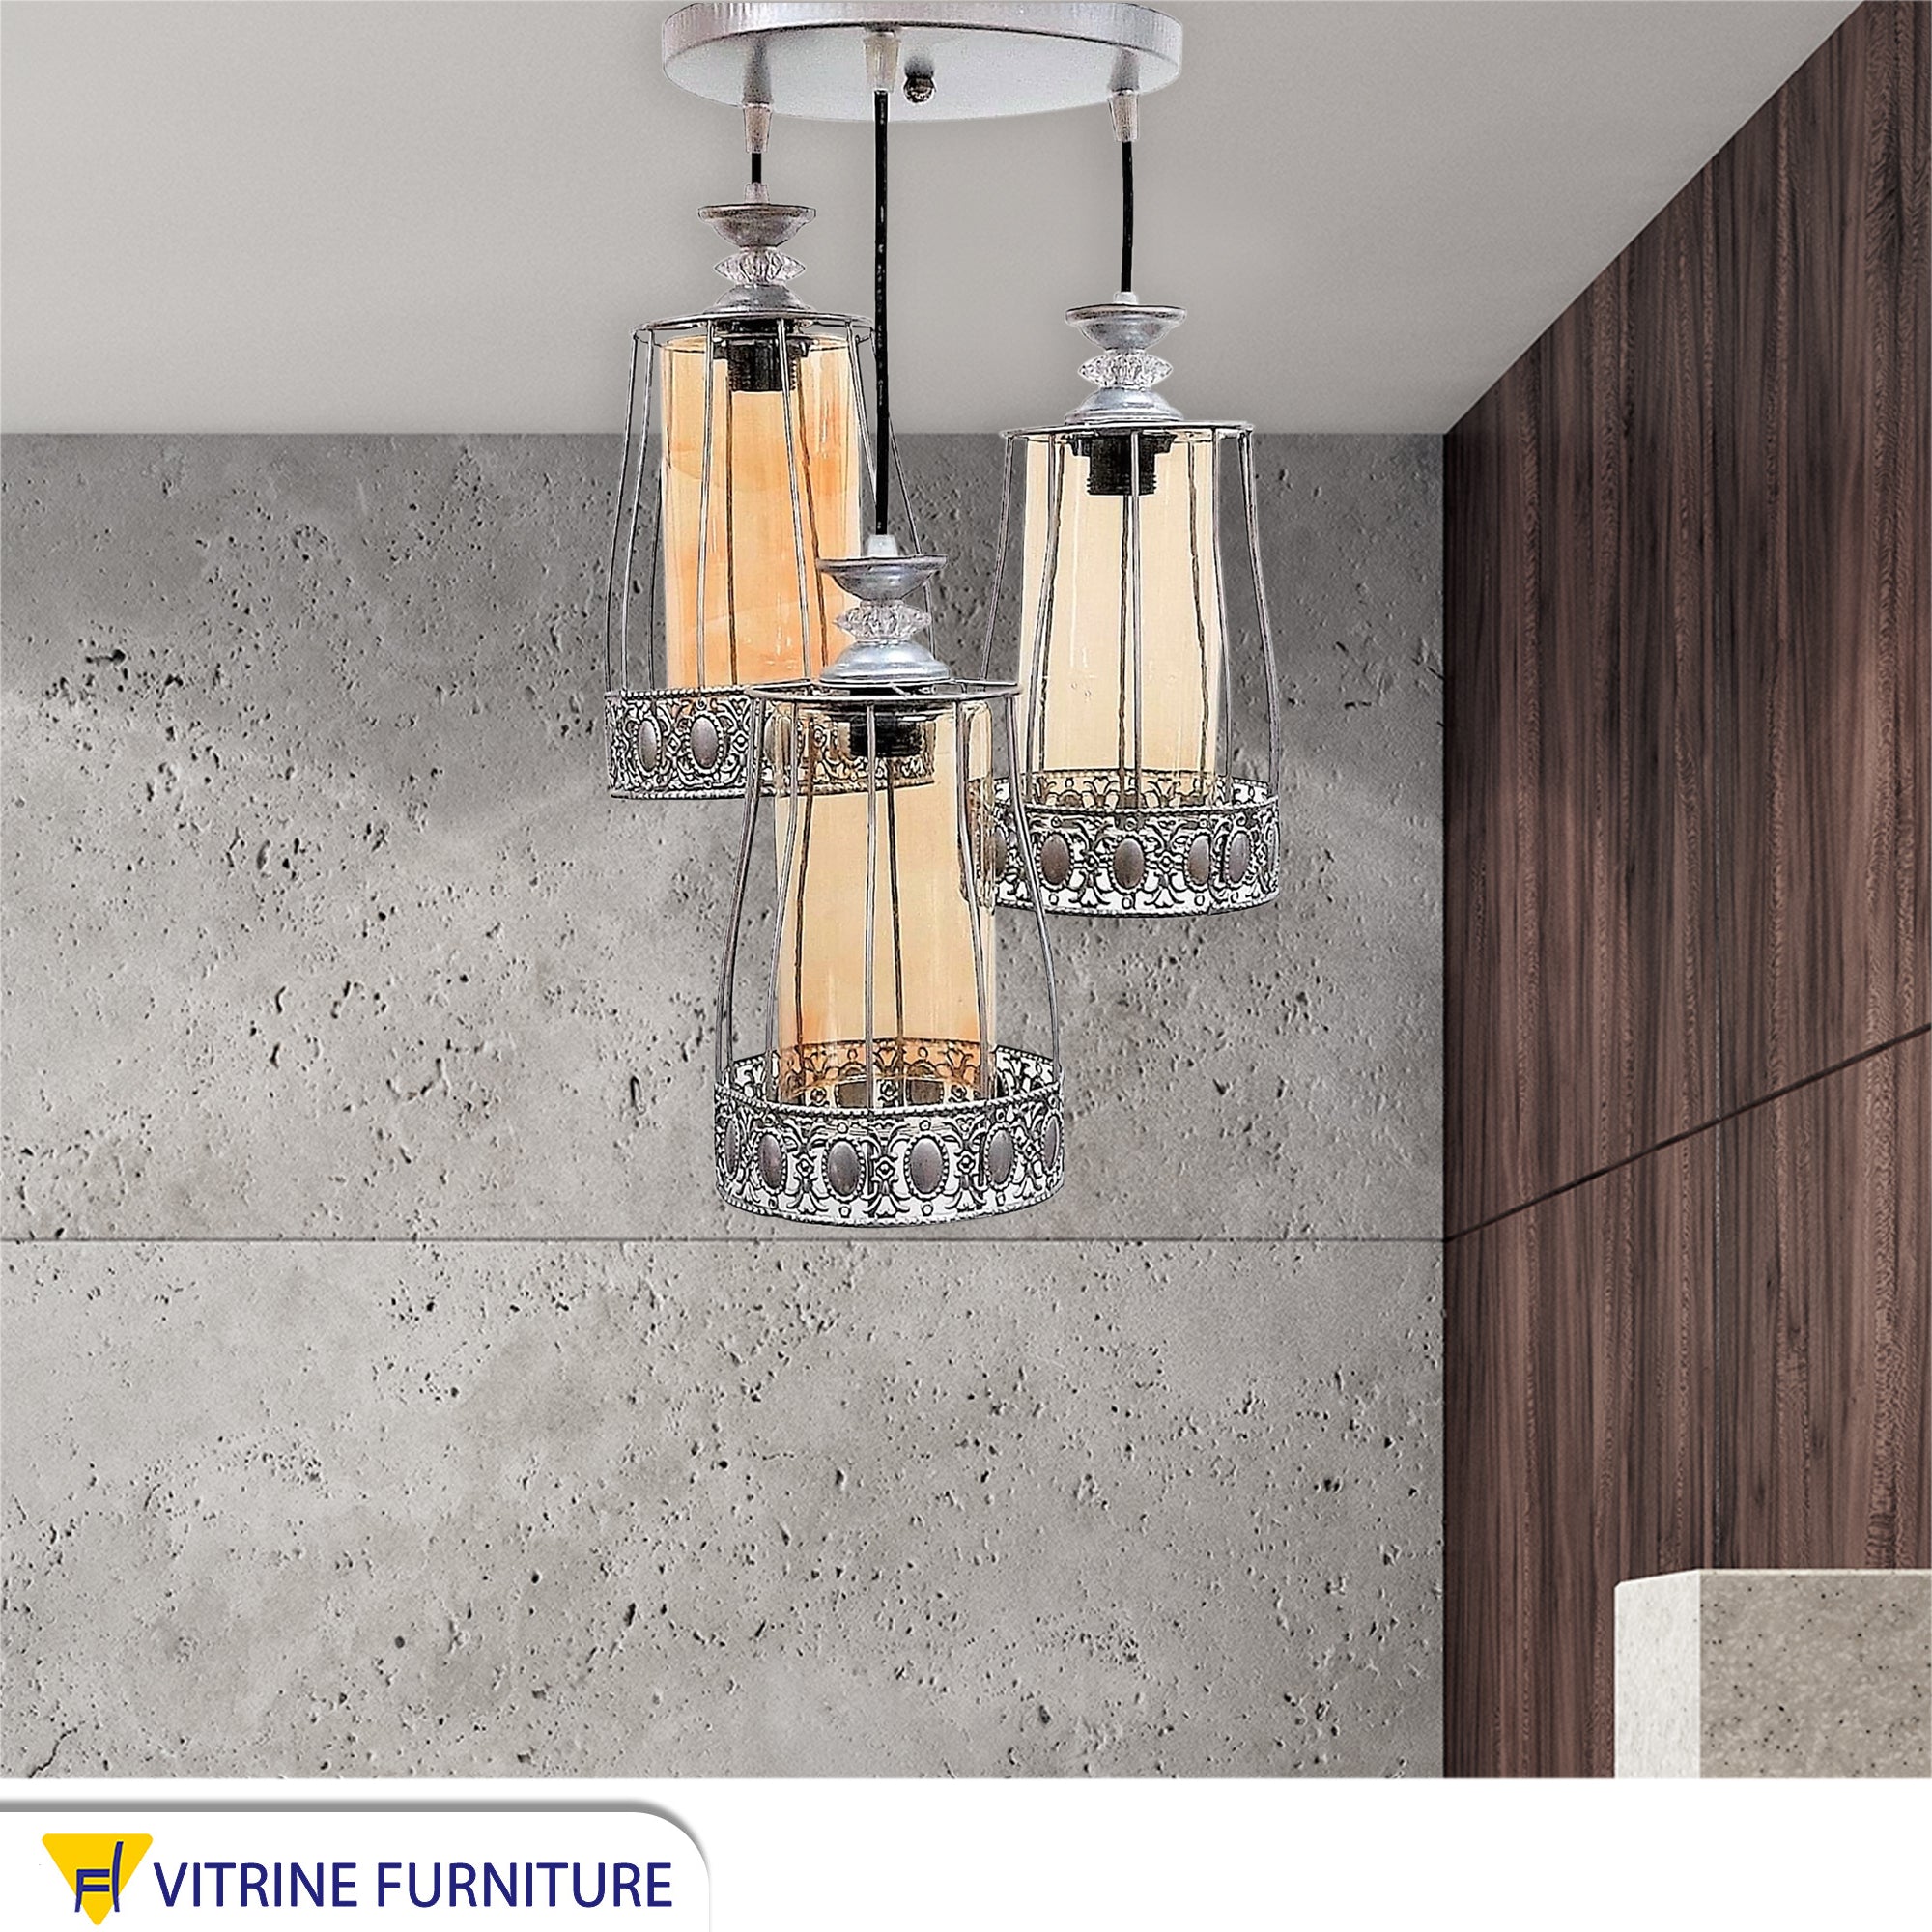 Triple chandelier with elegant design